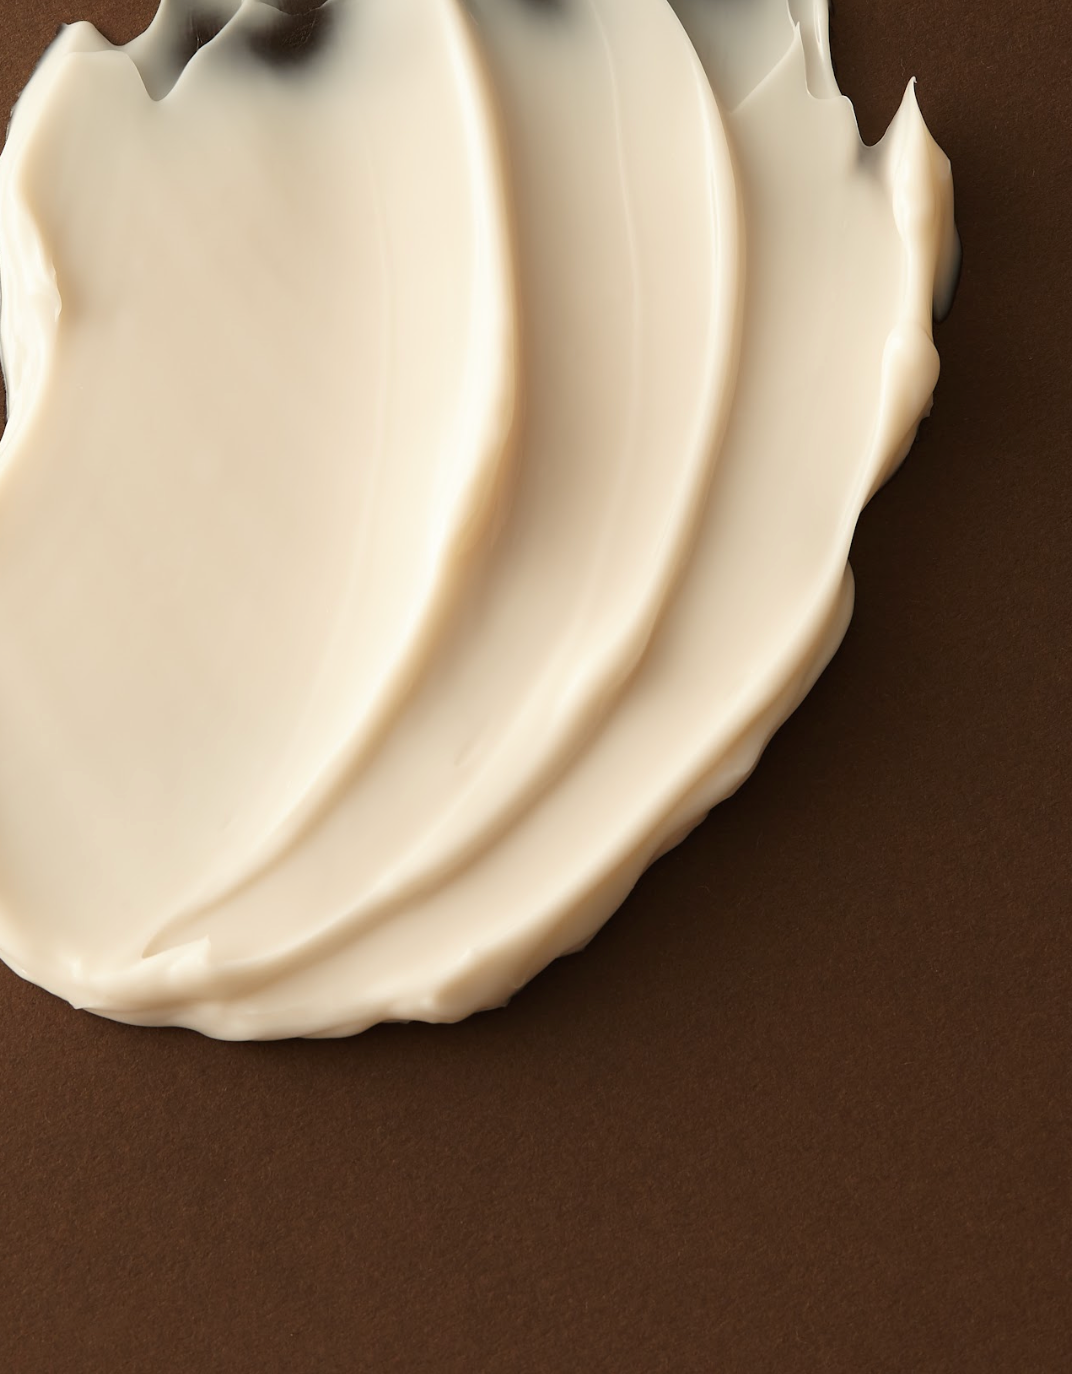 AXIS-Y Biome Ultimate Indulging Cream